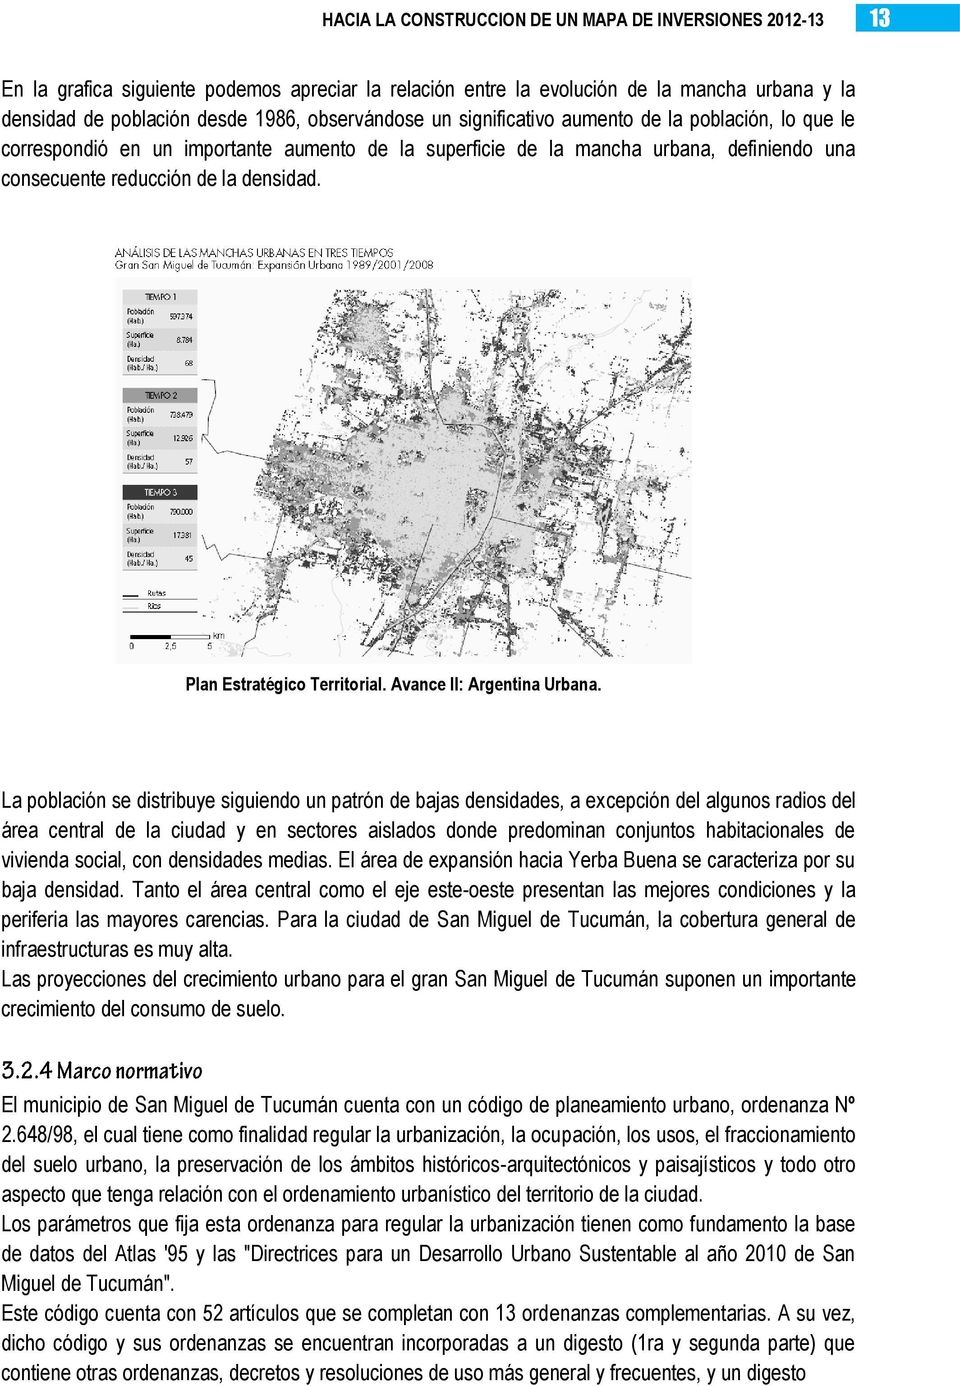 Plan Estratégico Territorial. Avance II: Argentina Urbana.